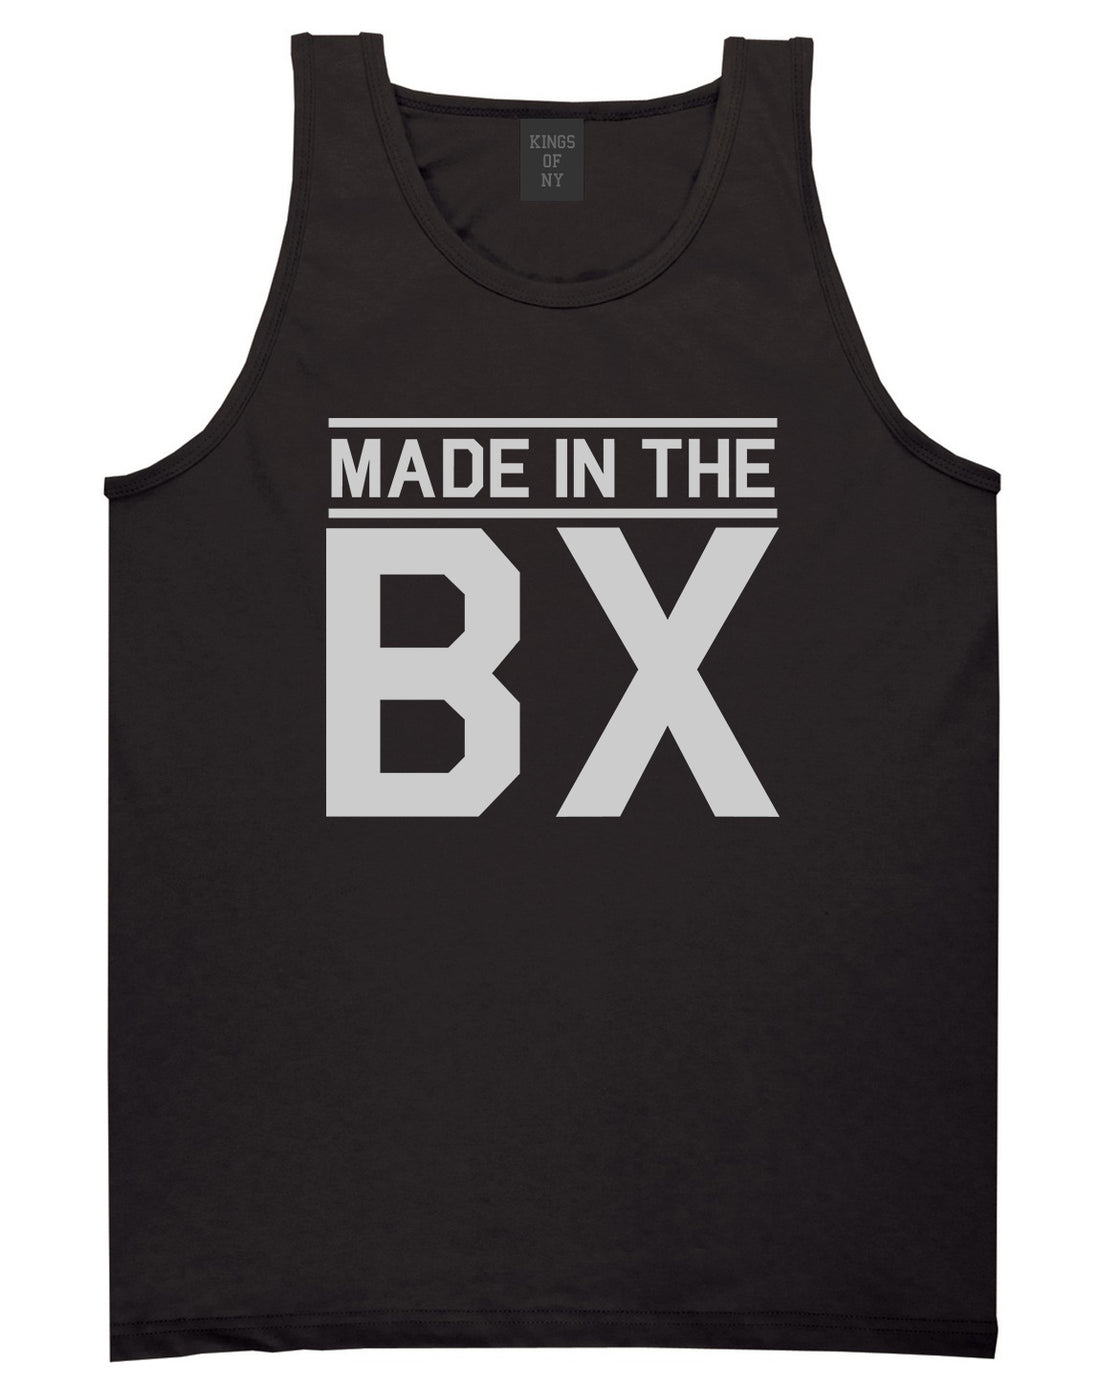 Made In The BX Bronx Mens Tank Top T-Shirt Black